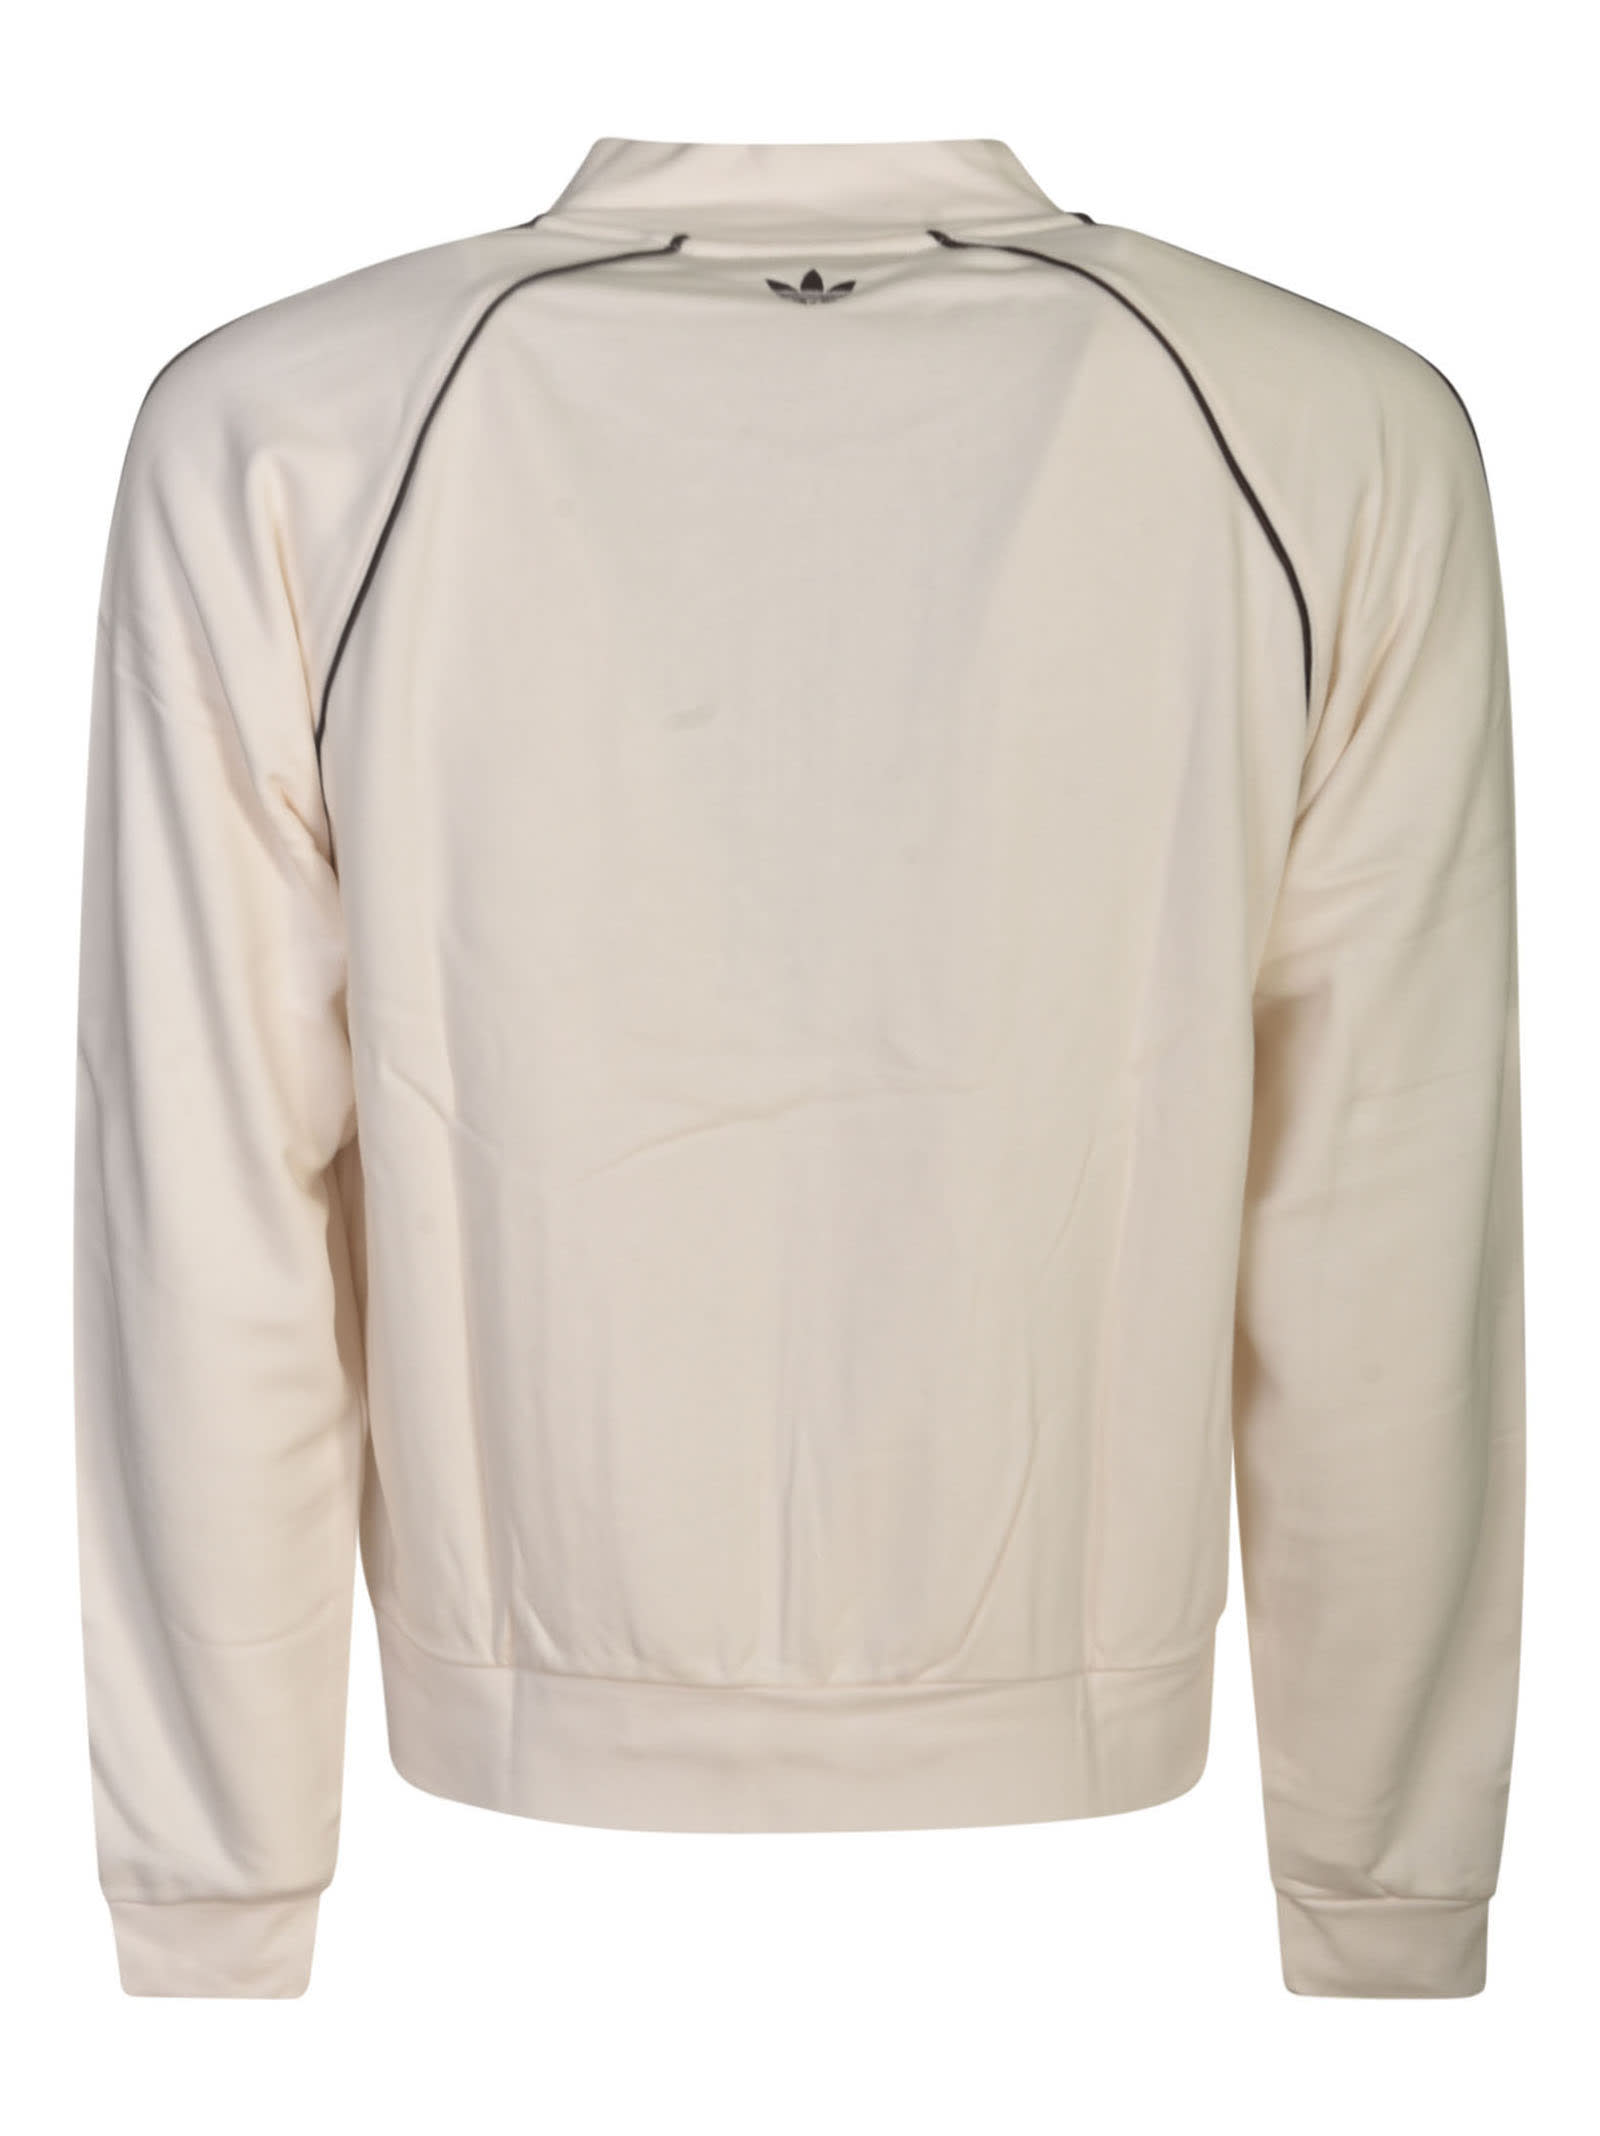 Shop Adidas Originals By Wales Bonner Stripe Jacket In White